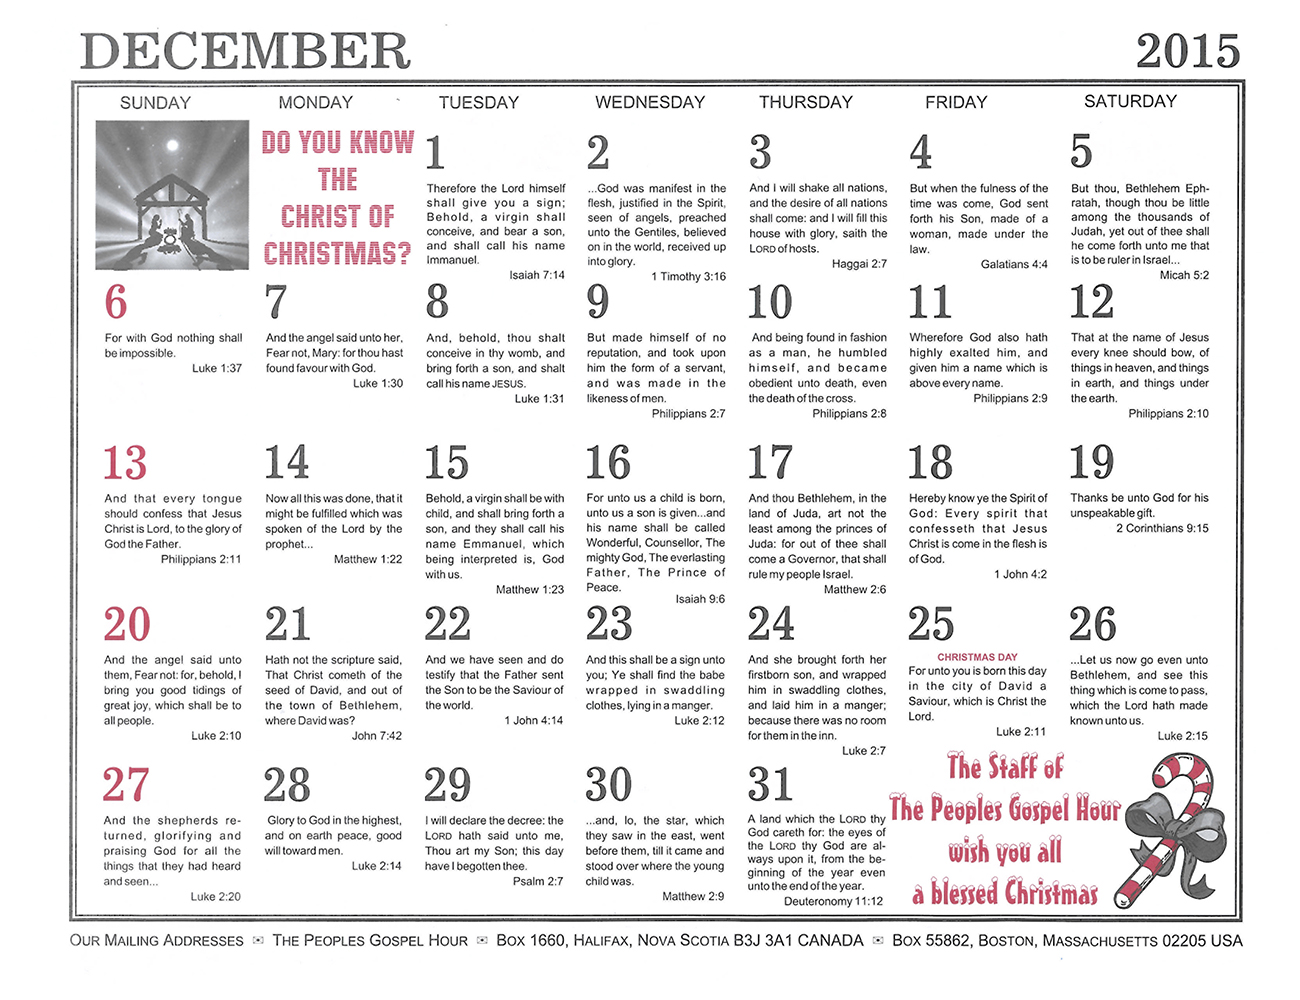 December: 2015 The Peoples Gospel Hour Calendar